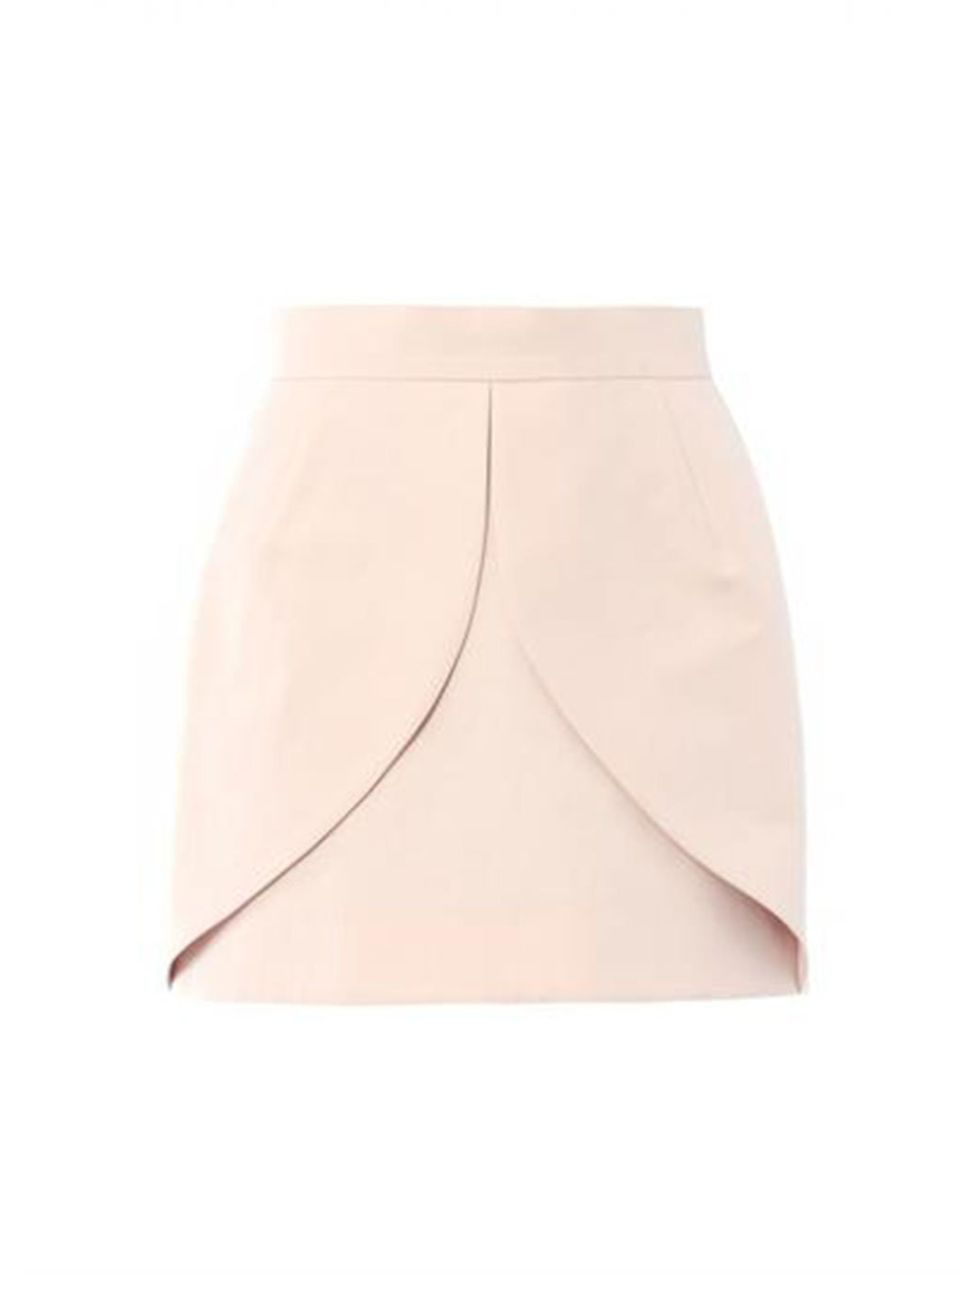 <p>Balenciaga skirt, £395, <a href="http://www.matchesfashion.com/product/189676">matchesfashion.com </a></p>